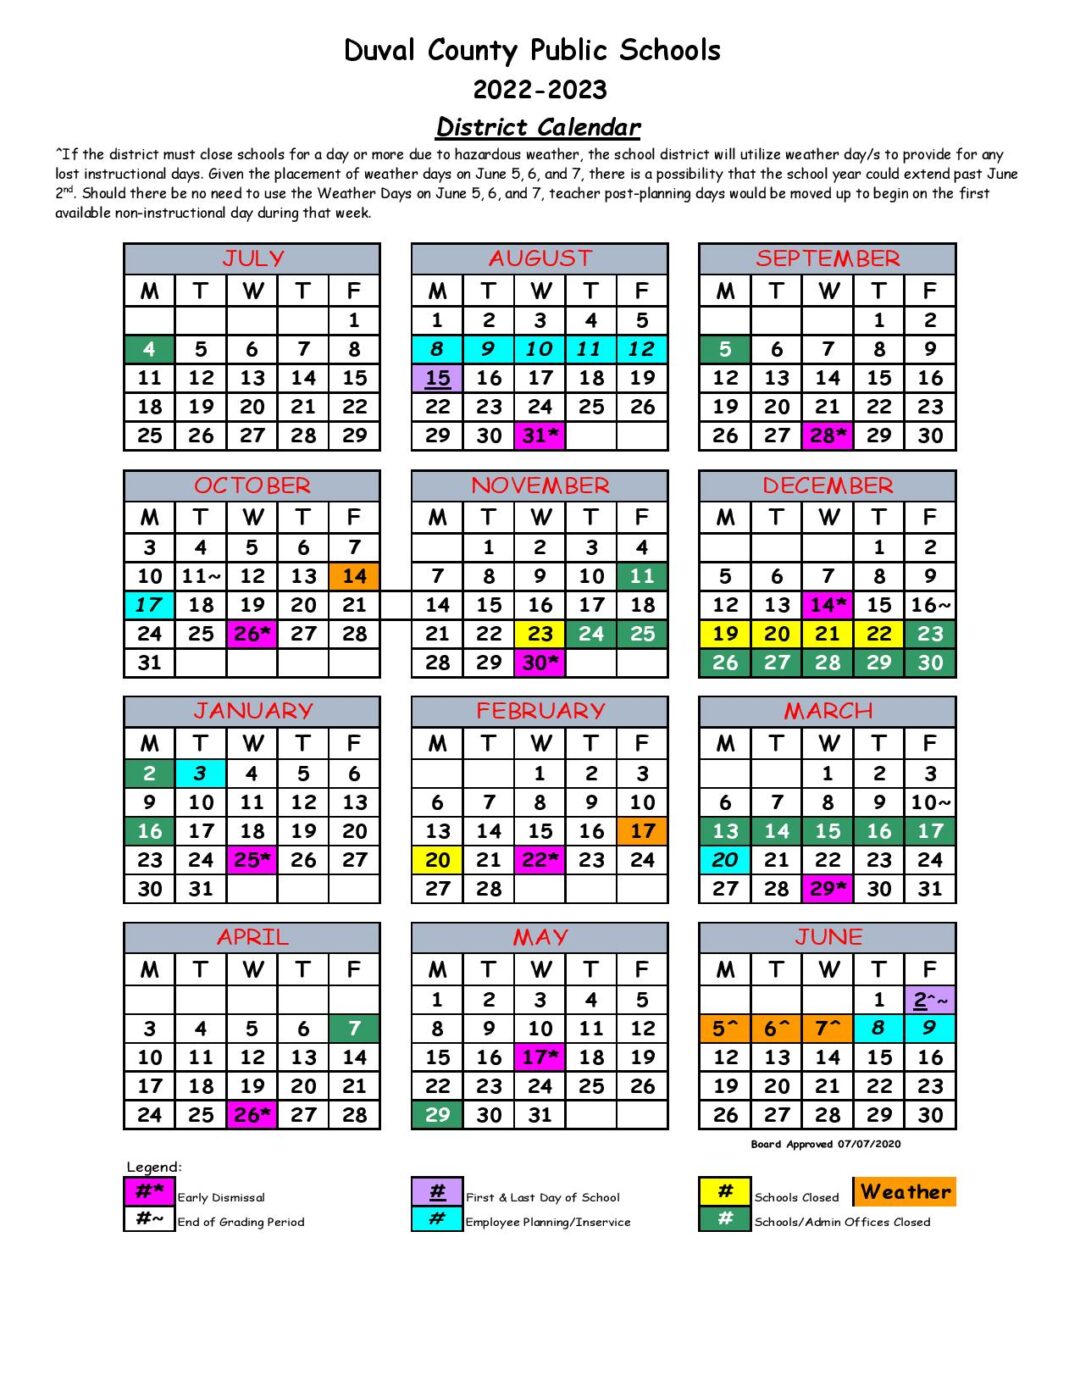 duval-county-public-schools-calendar-2022-2023-in-pdf